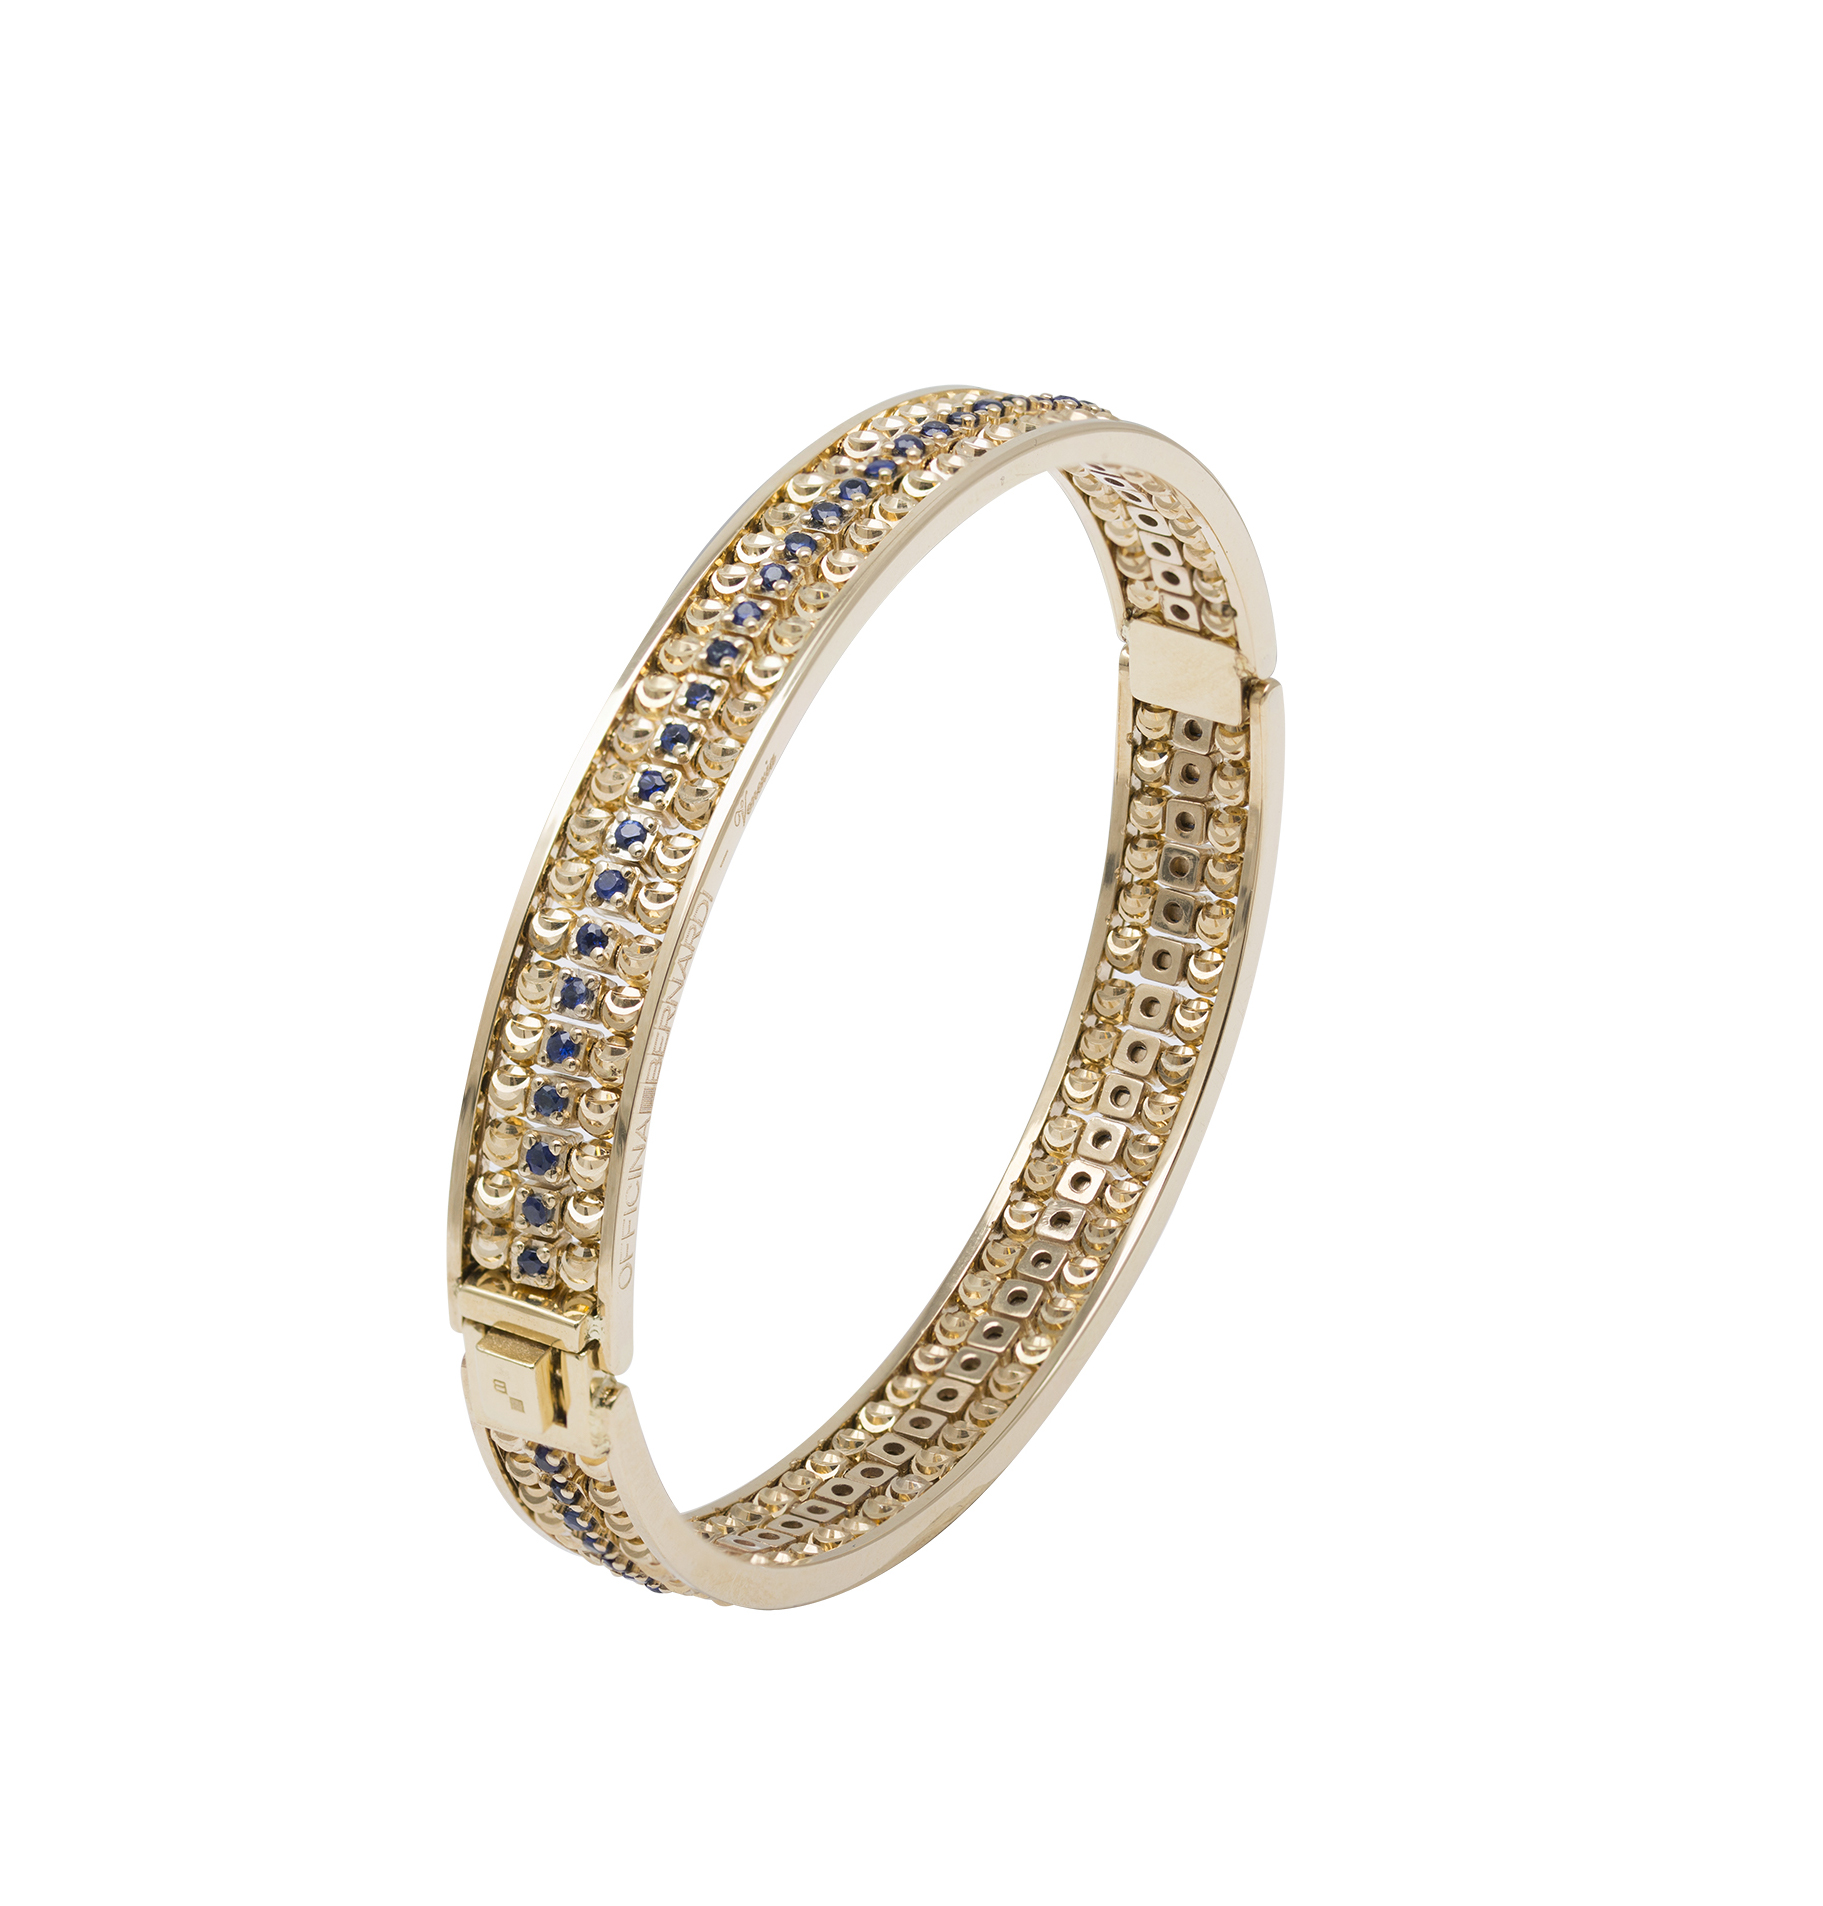 Bangle bracelet with blue sapphires